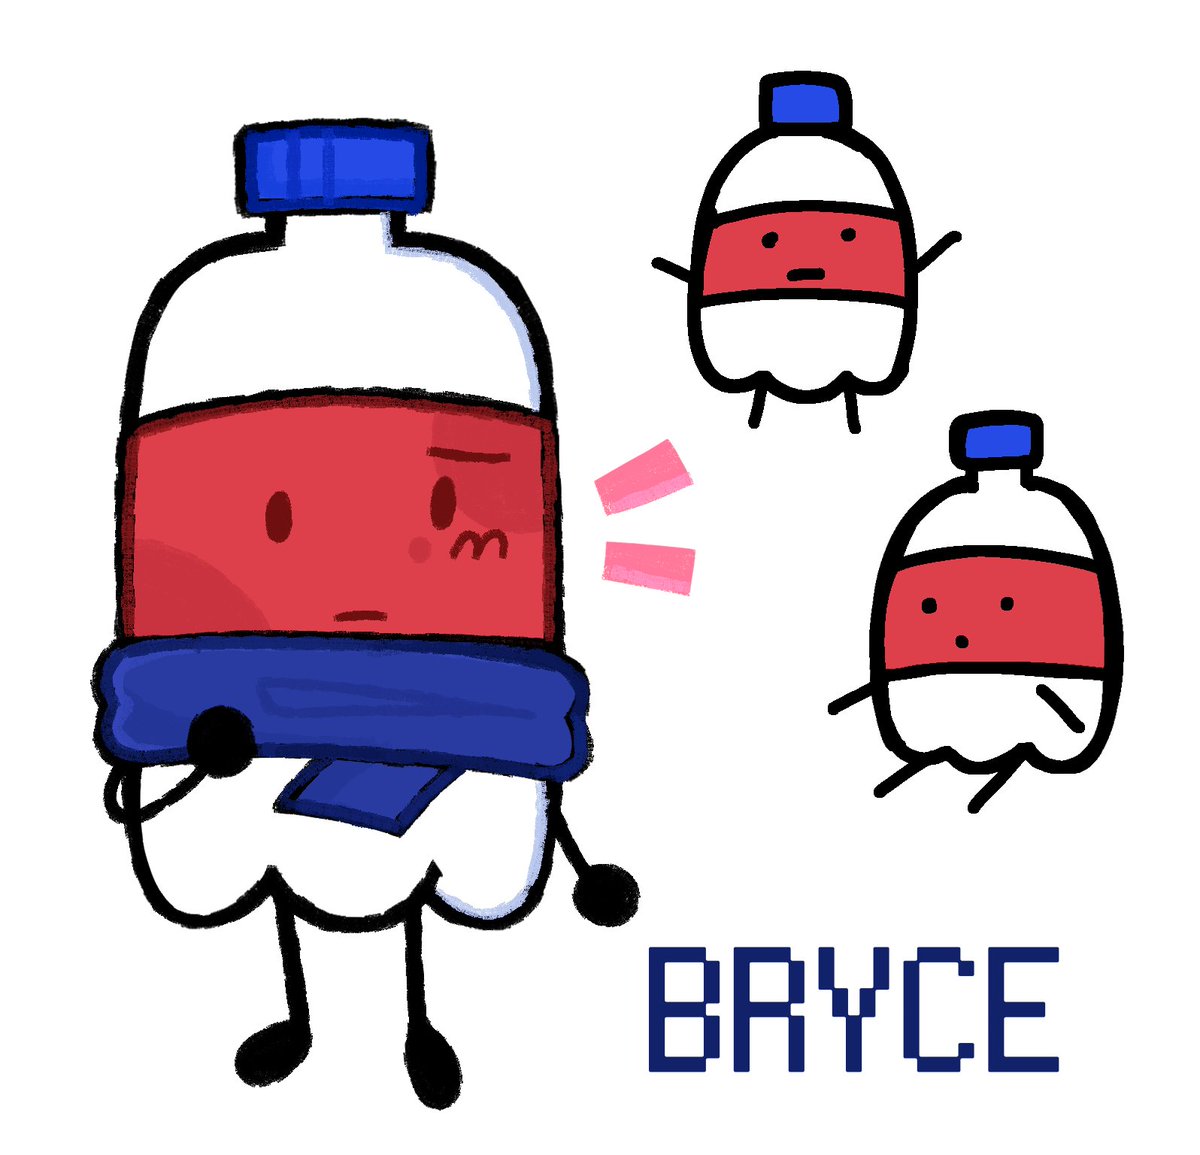 Bryce
Doodle

#onehfj